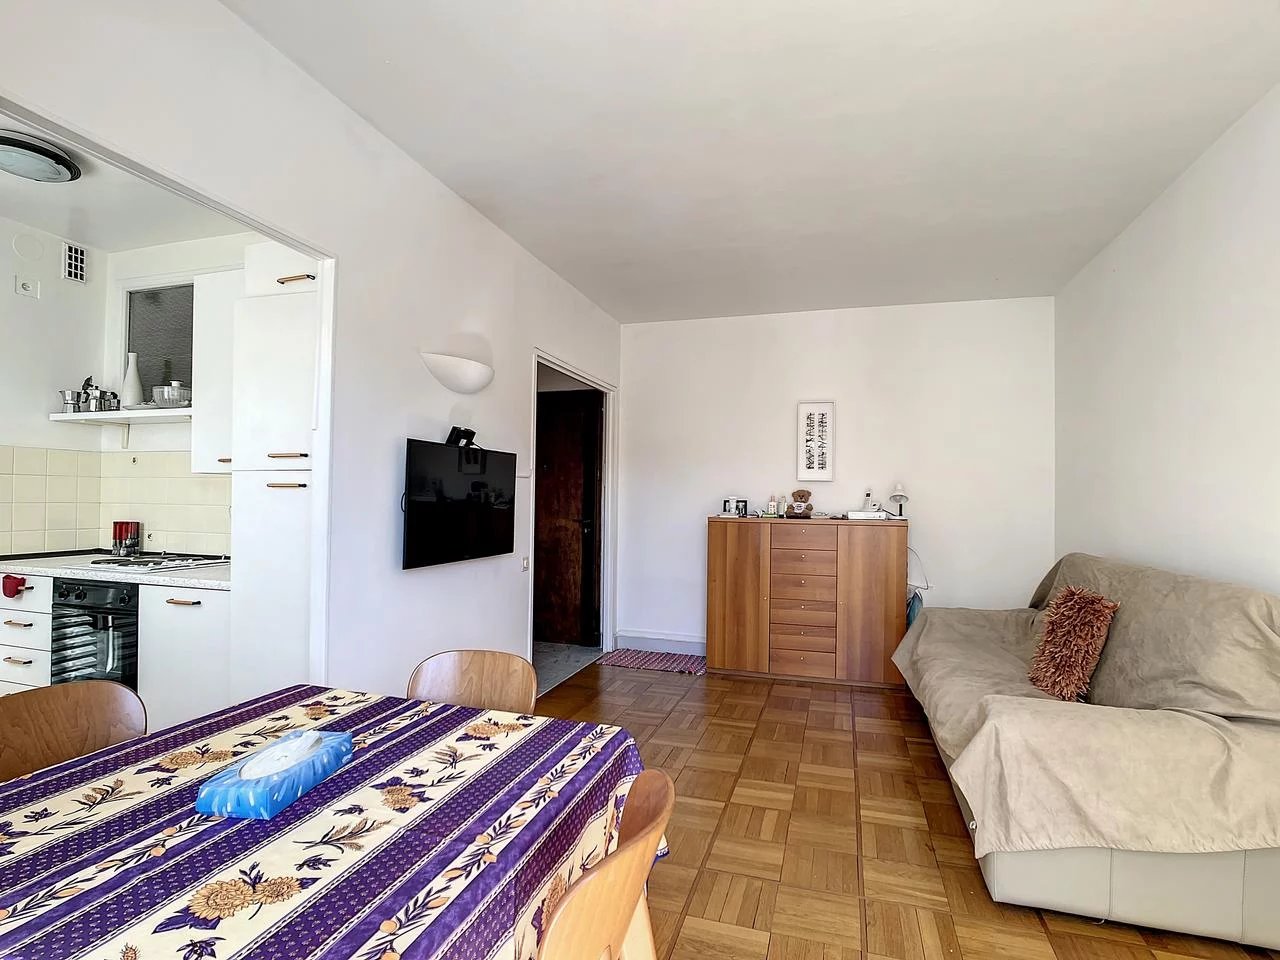 Appartement  1 Locali 28.92m2  In vendita   225 000 €